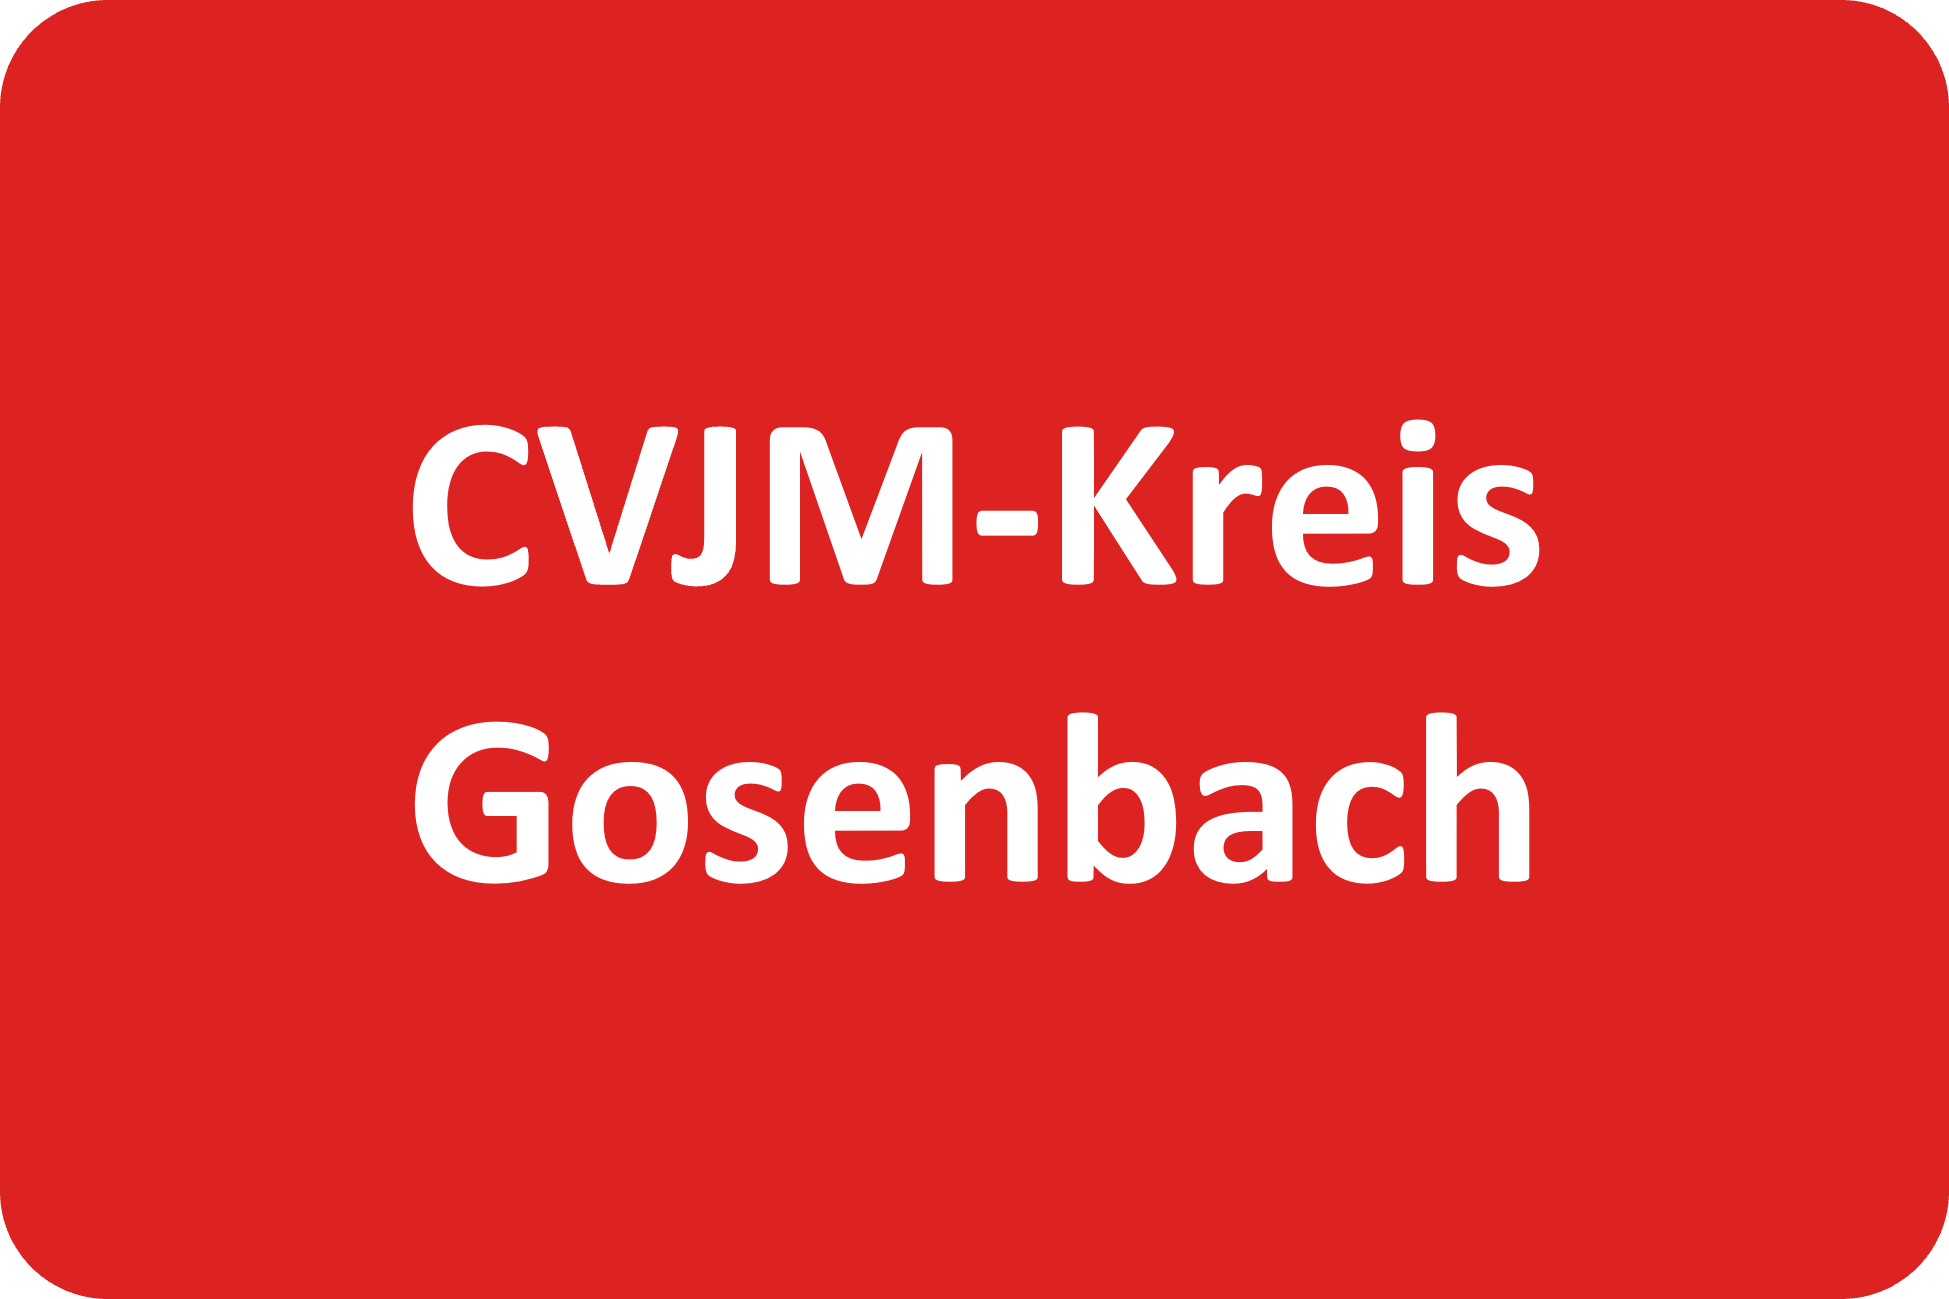 CVJM Kreis Gosenbach